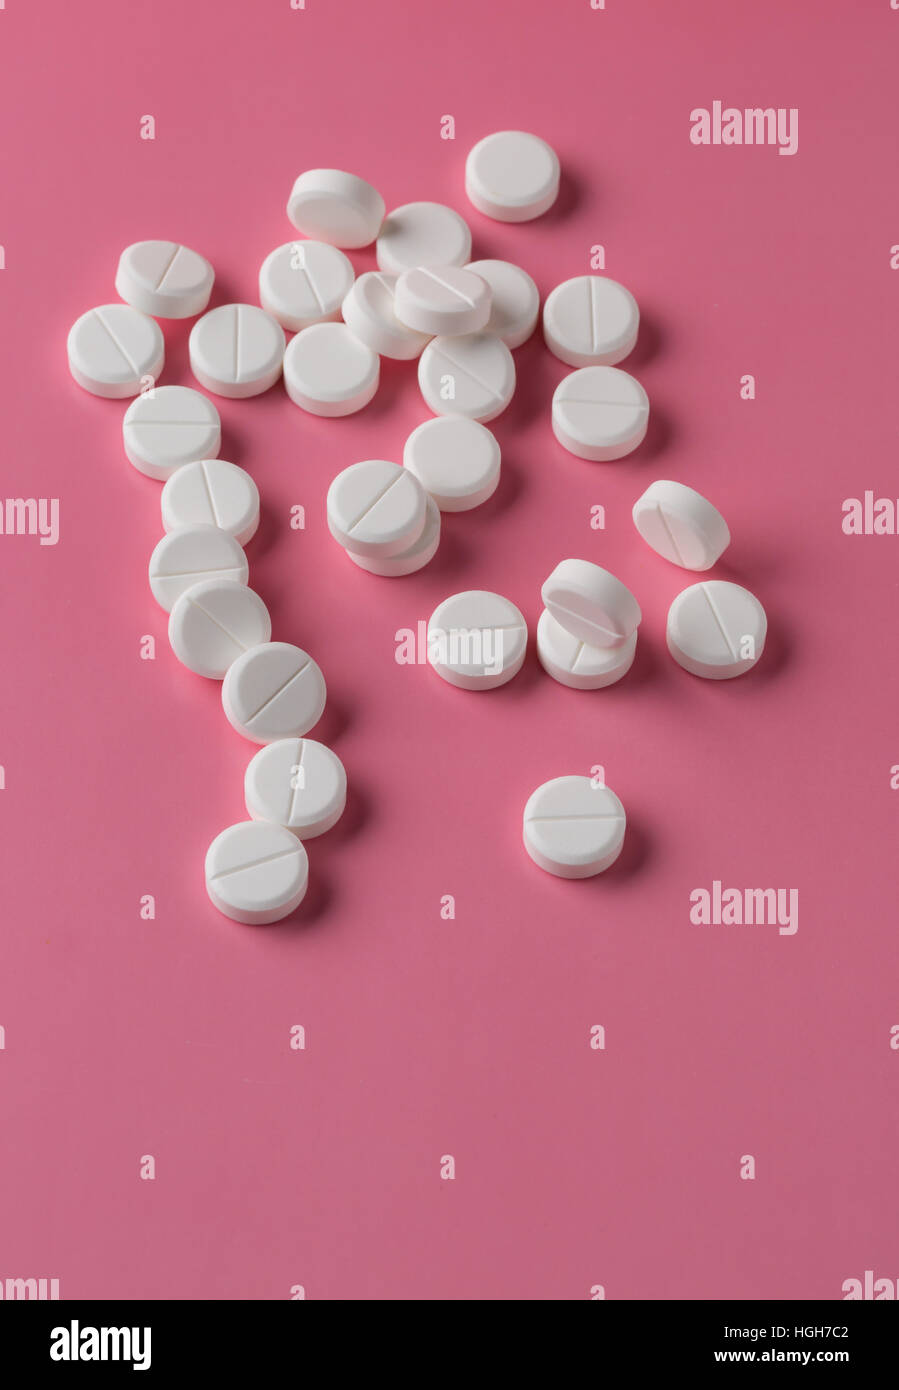 Heap of round white pills Stock Photo